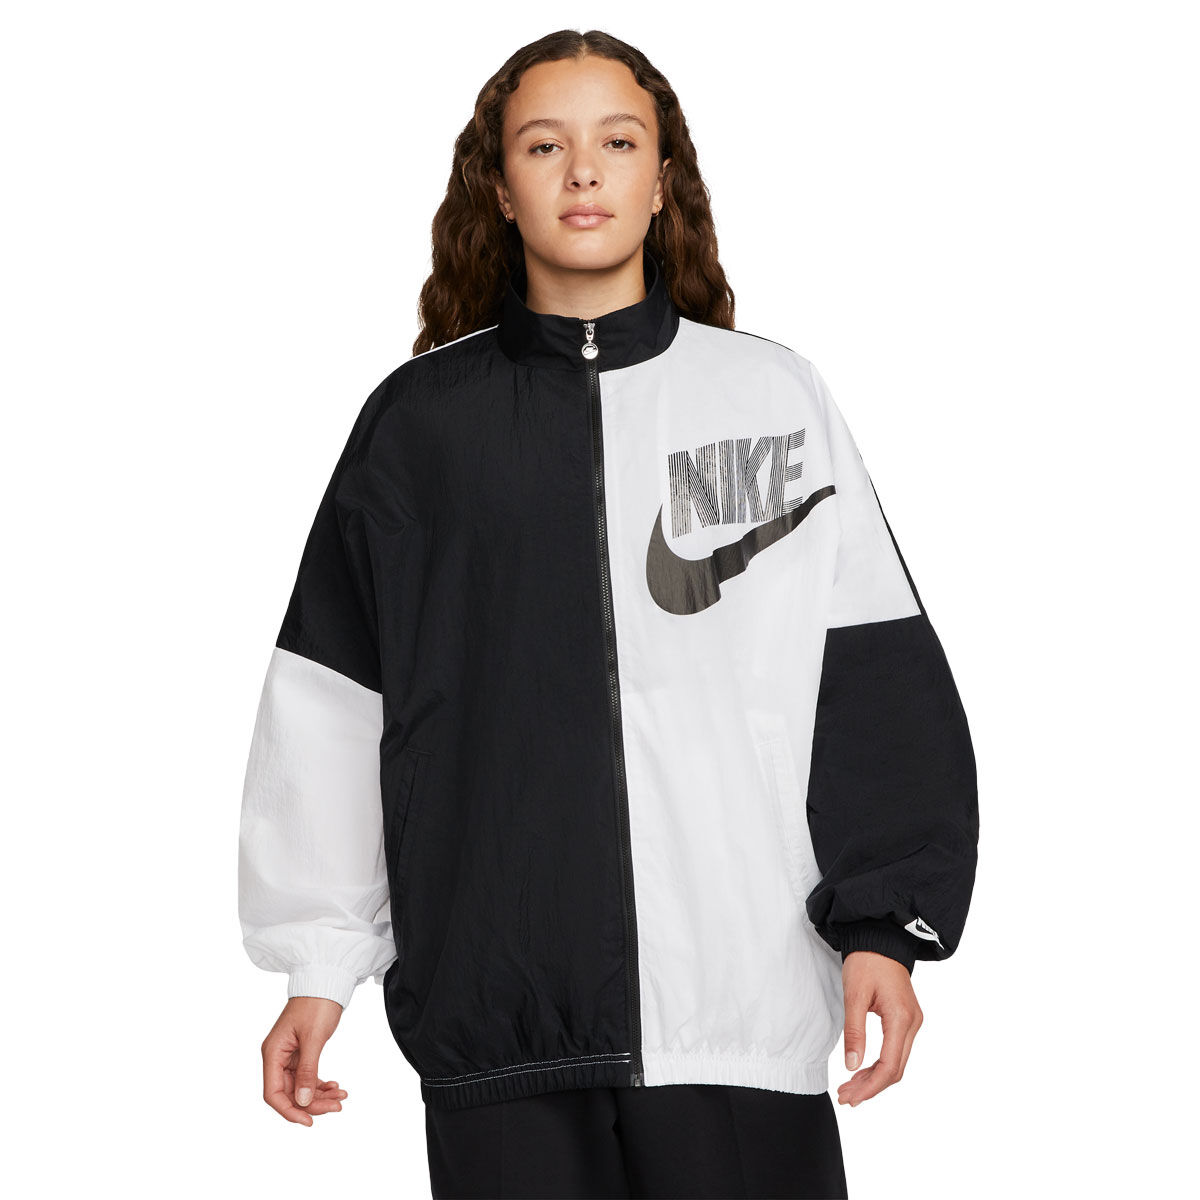 Nike Dance Apparel - Activewear & Sports Clothing - rebel